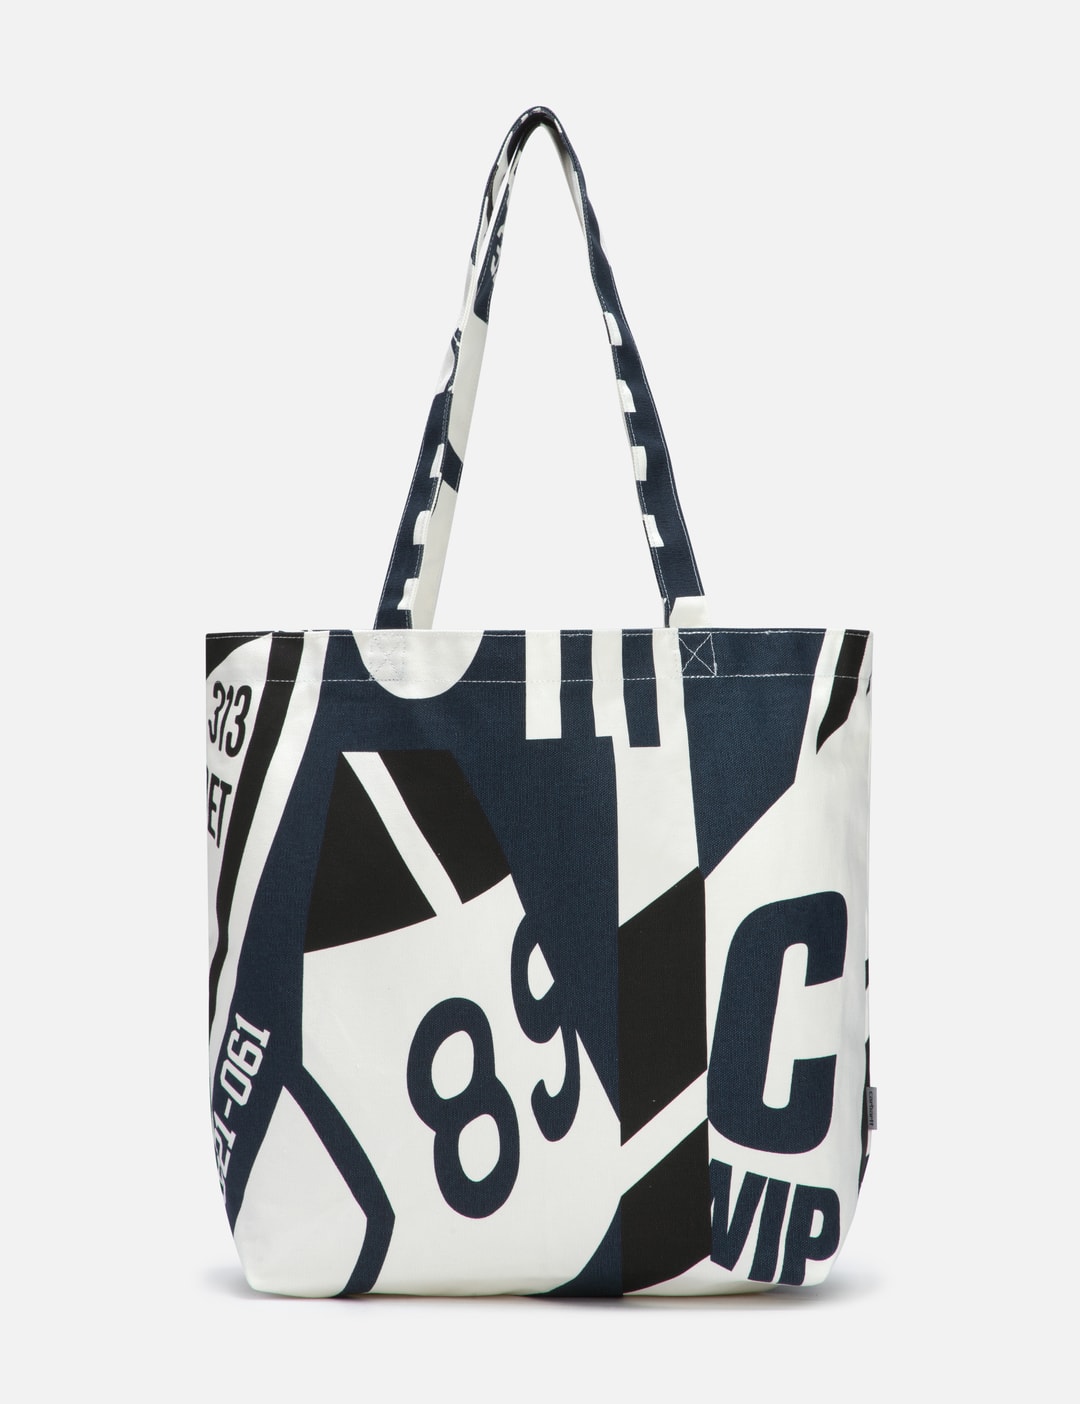 Carhartt WIP Graphic Tote Bag (Marina Blue)